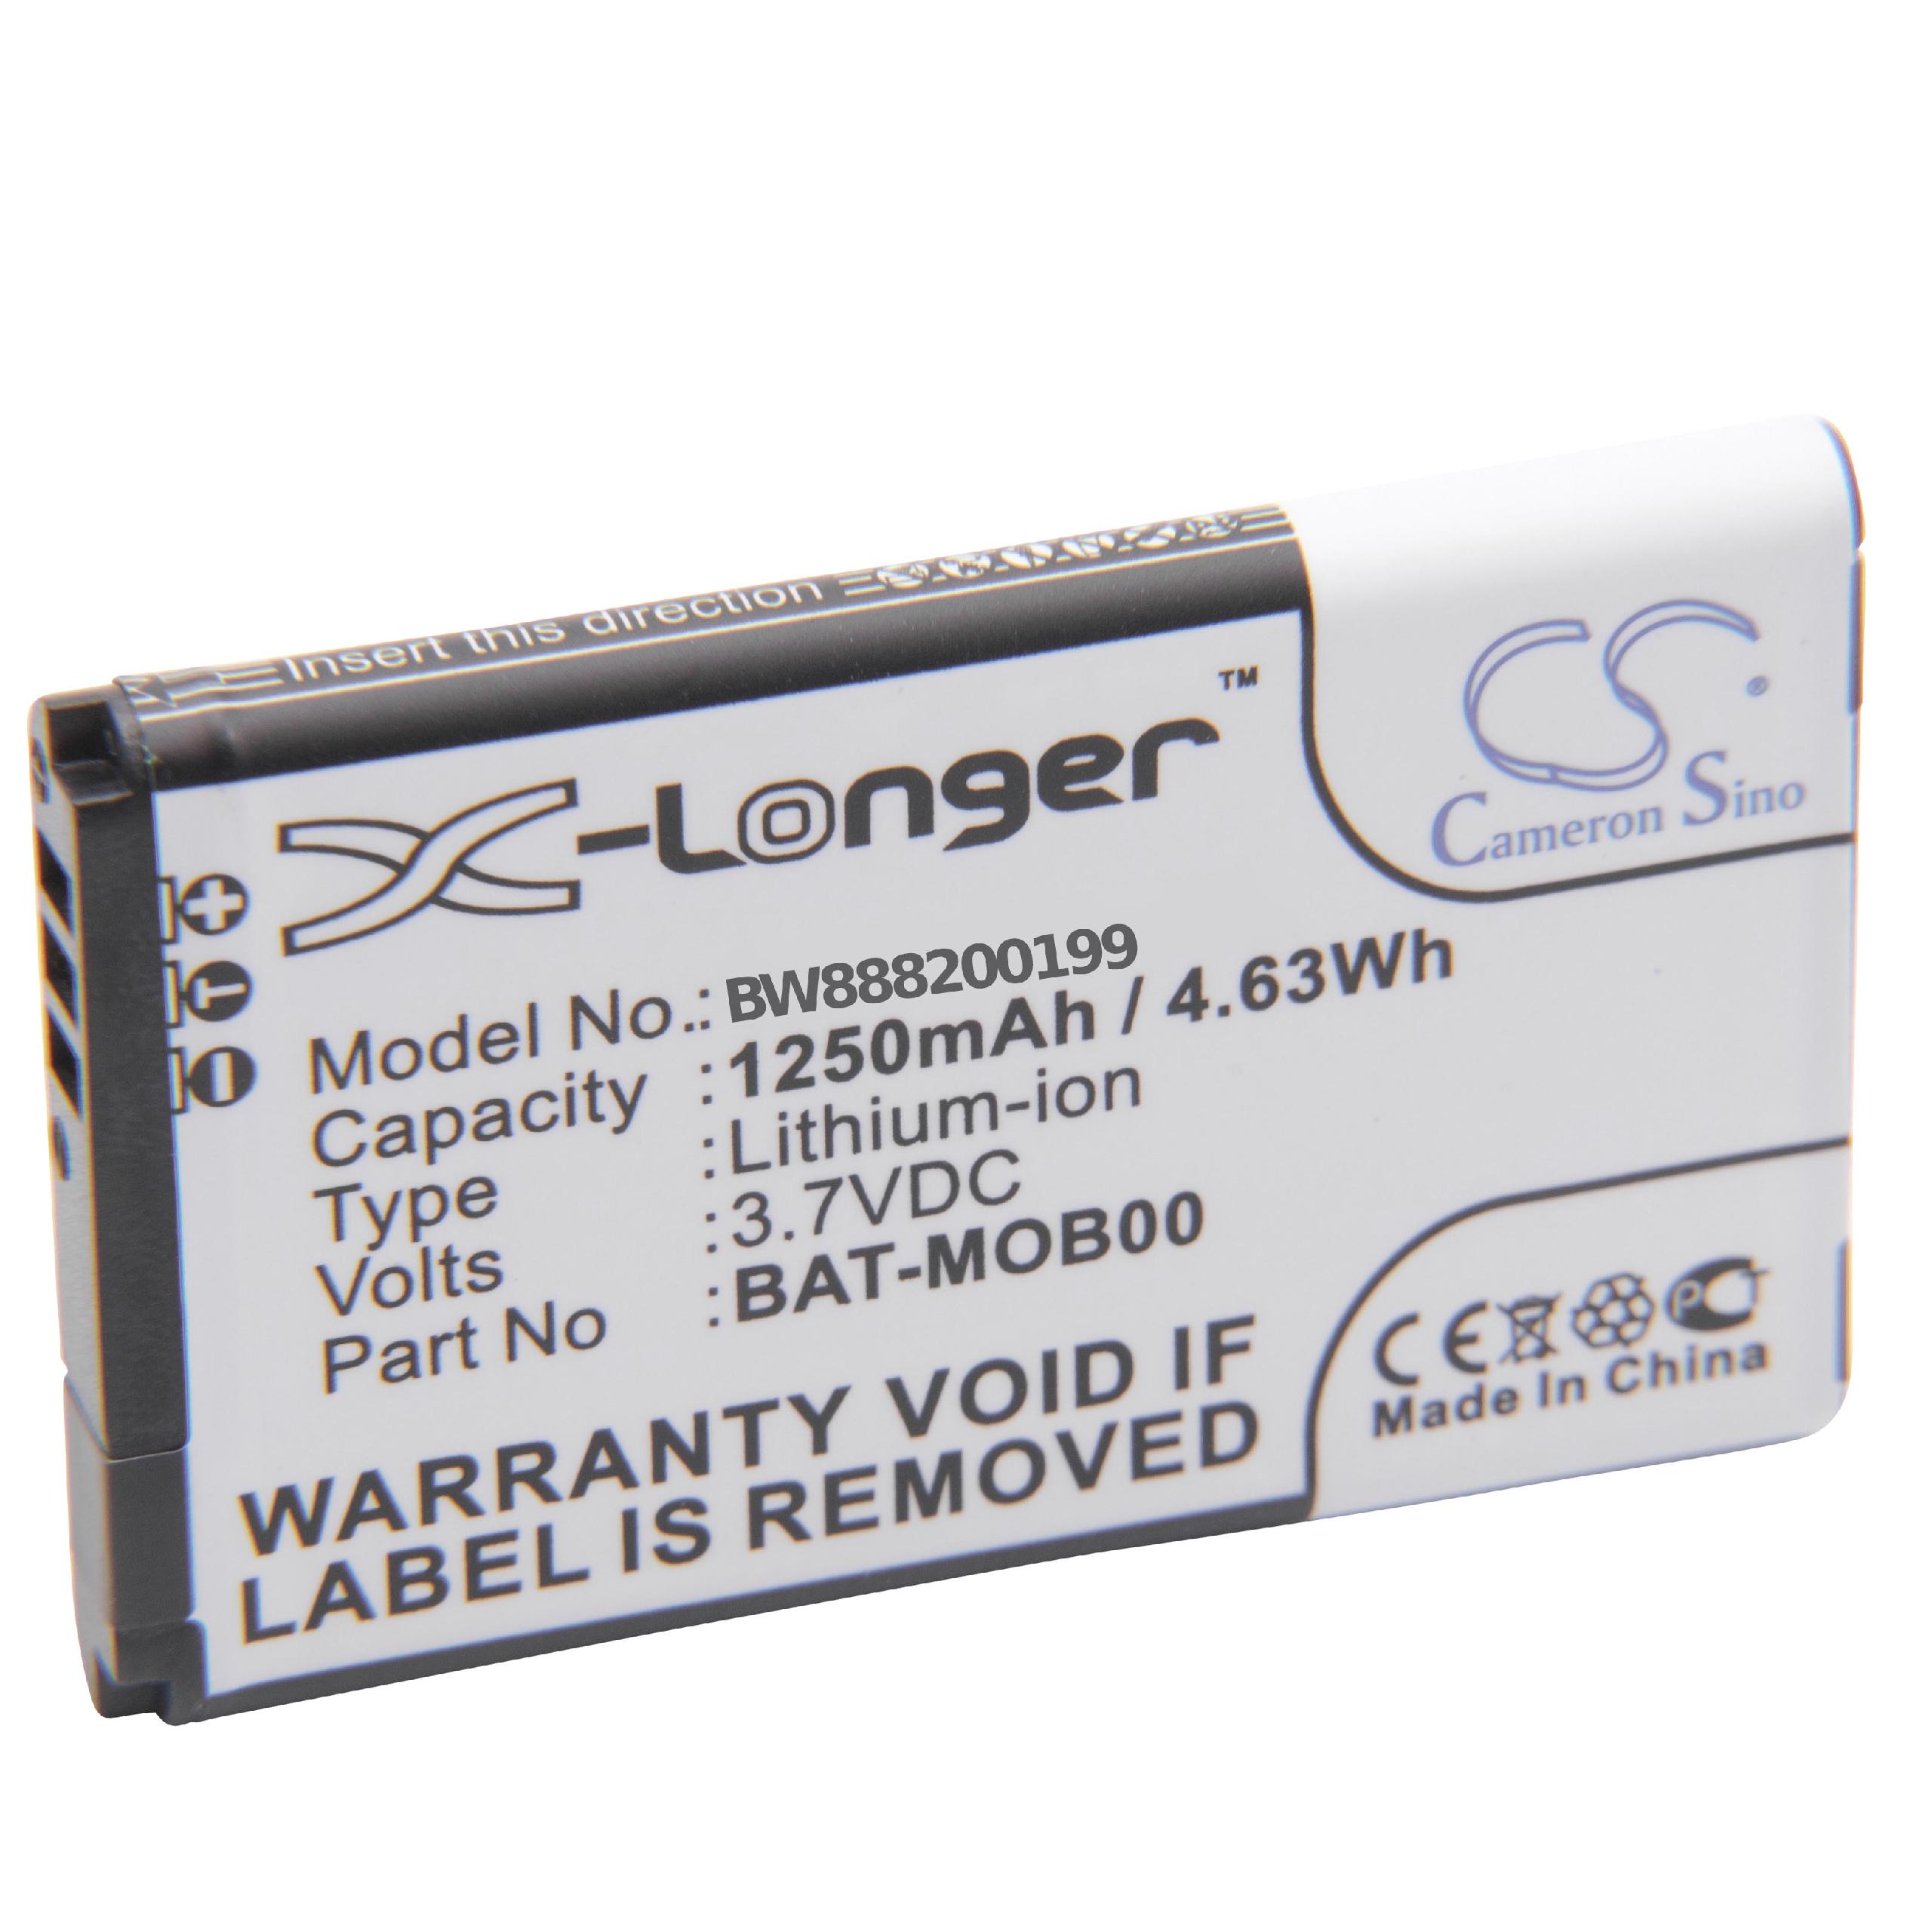 Handheld Computer Battery Replacement for Honeywell 3159122, 26111710, BAT-MOB00, 55-003233-01 - 1250mAh, 3.7V